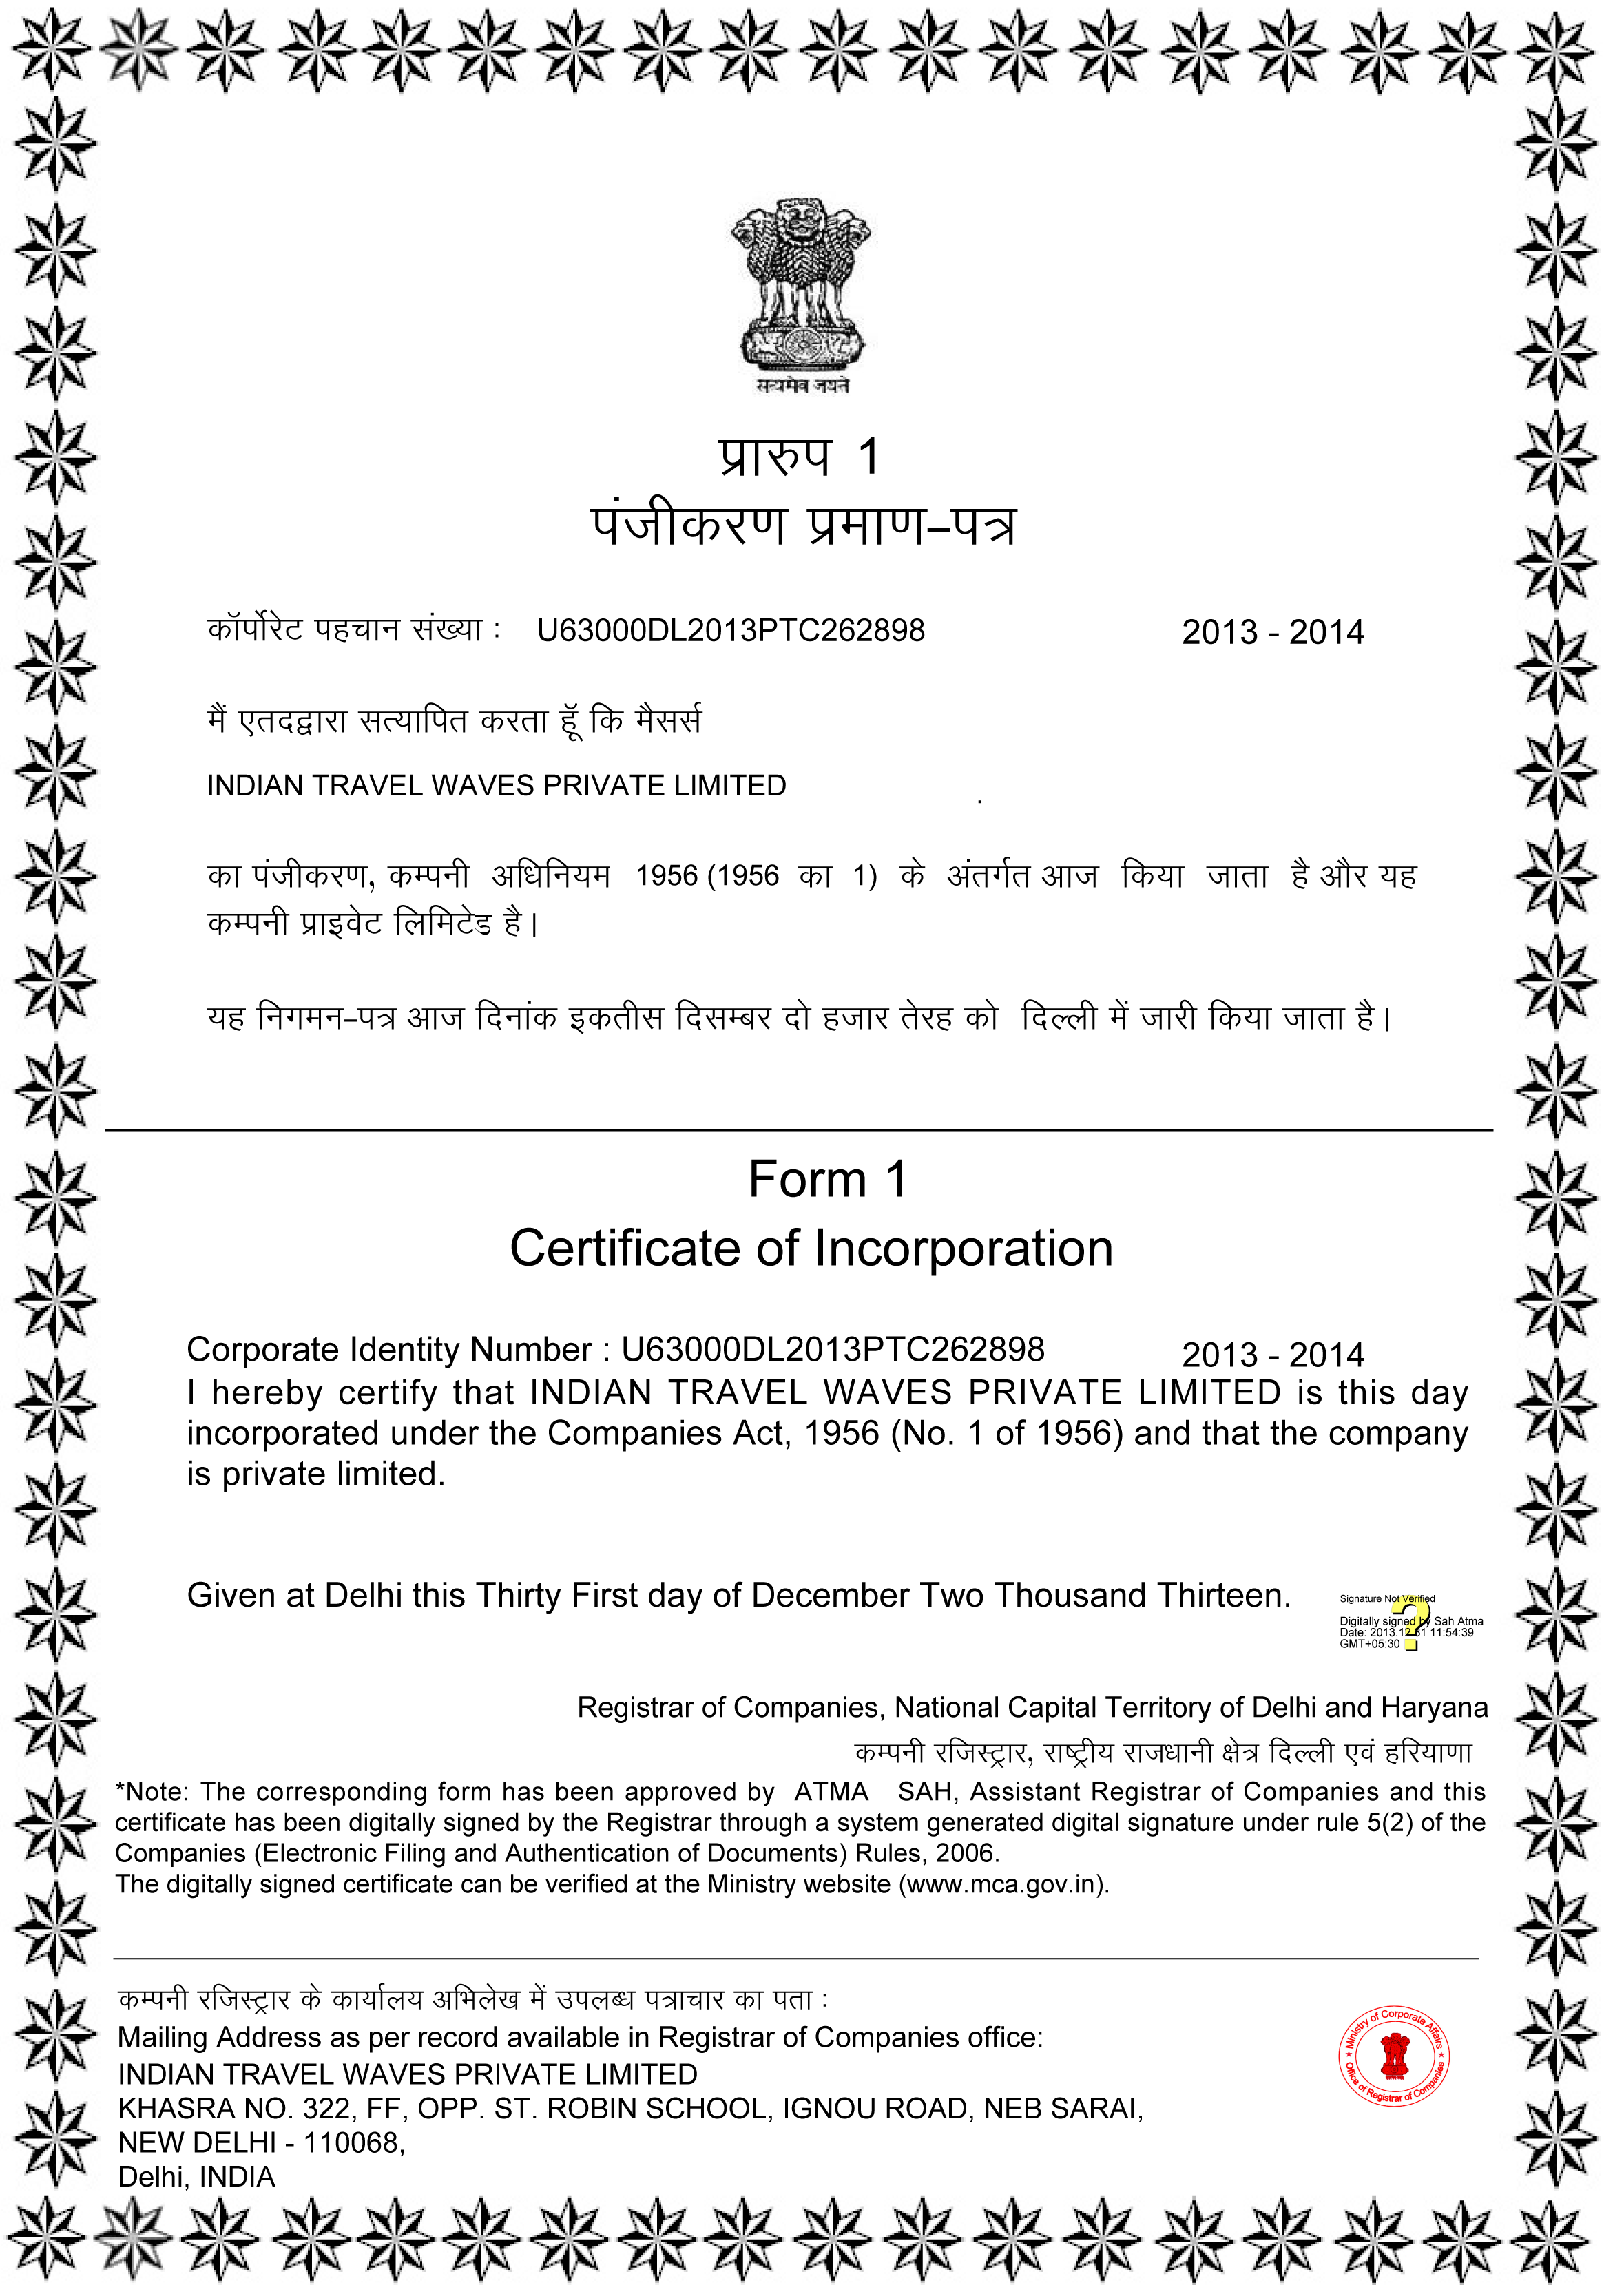 Registration/certificate